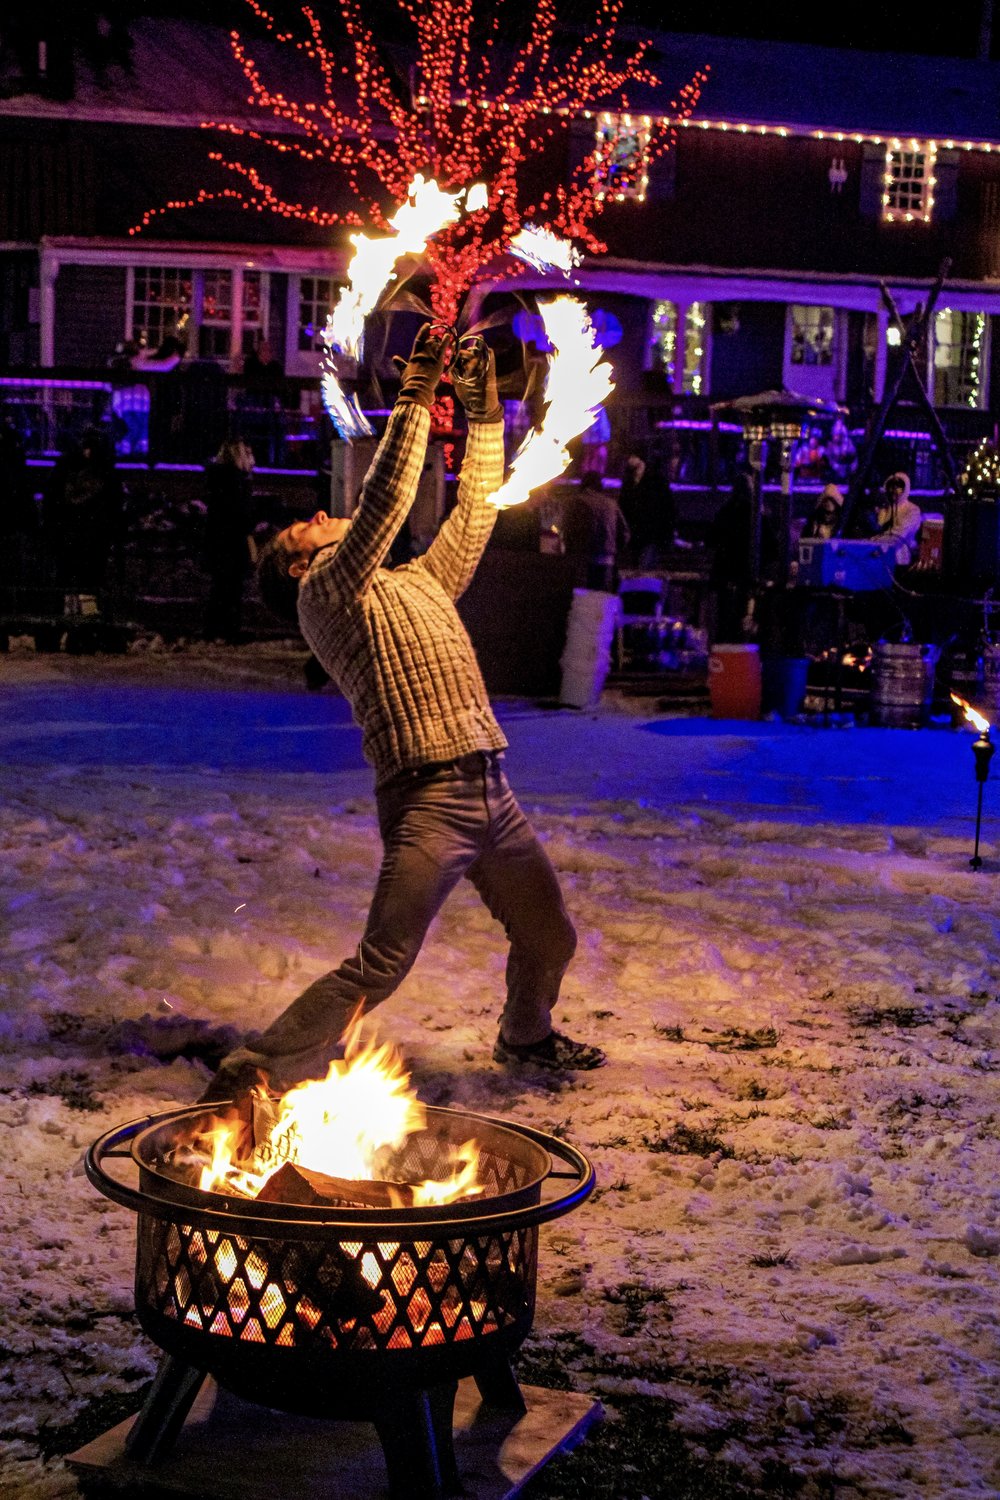 A performer displays his fire artistry skills at Peddler’s Village.